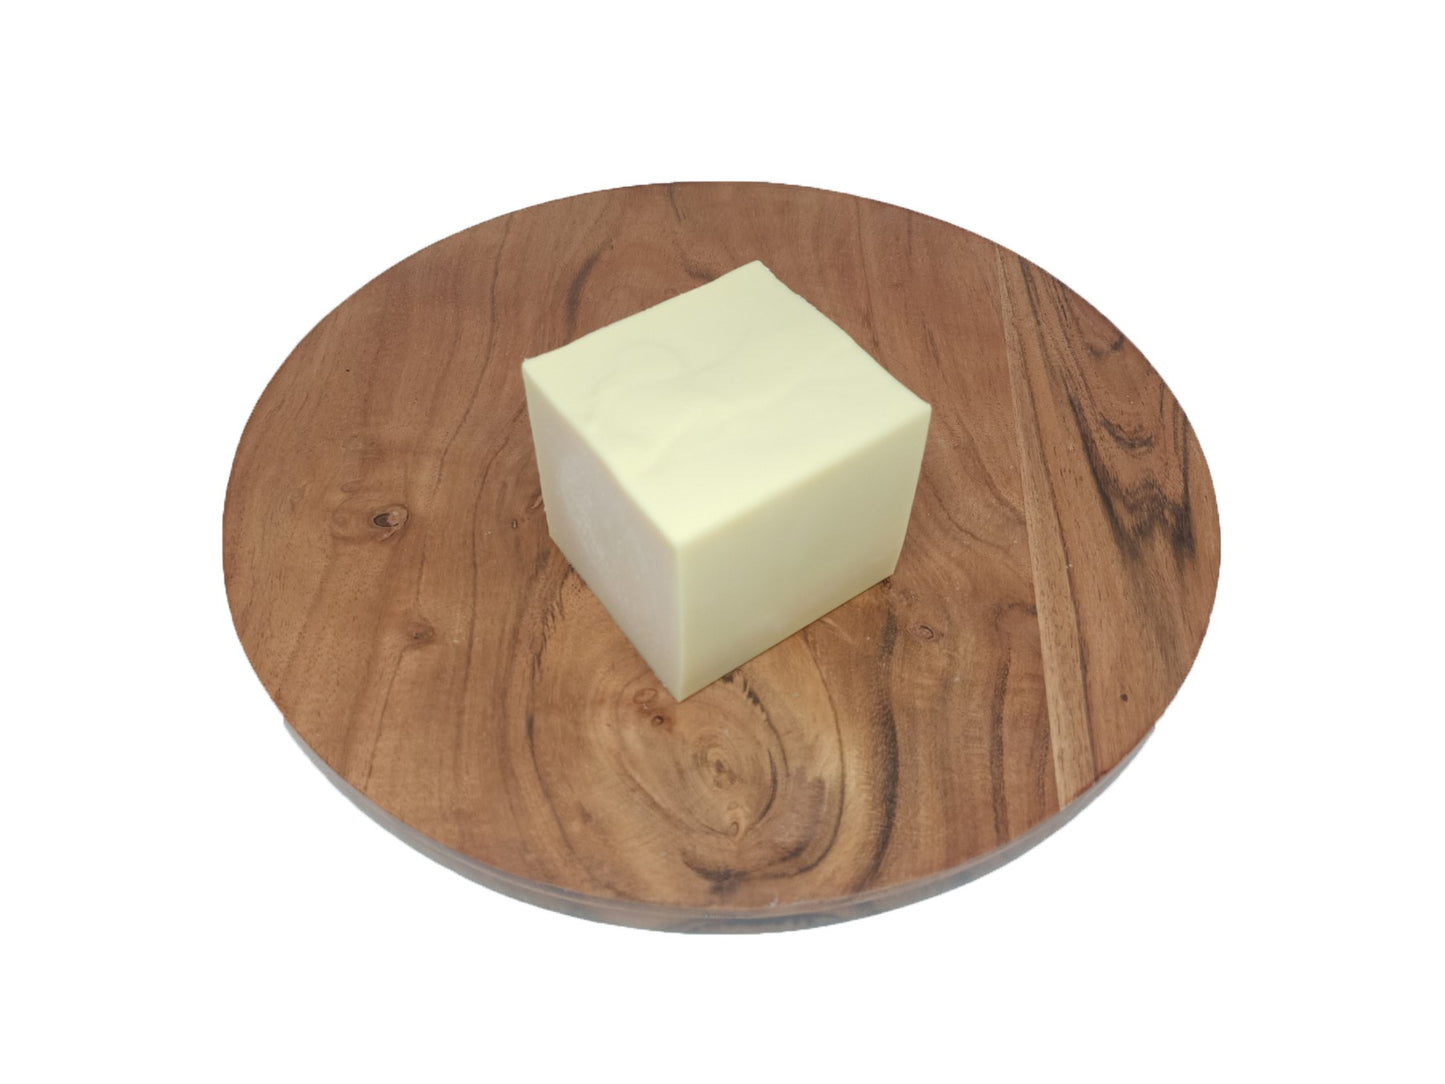 Create Your Own Soap - Custom Dish & Laundry Block Creation